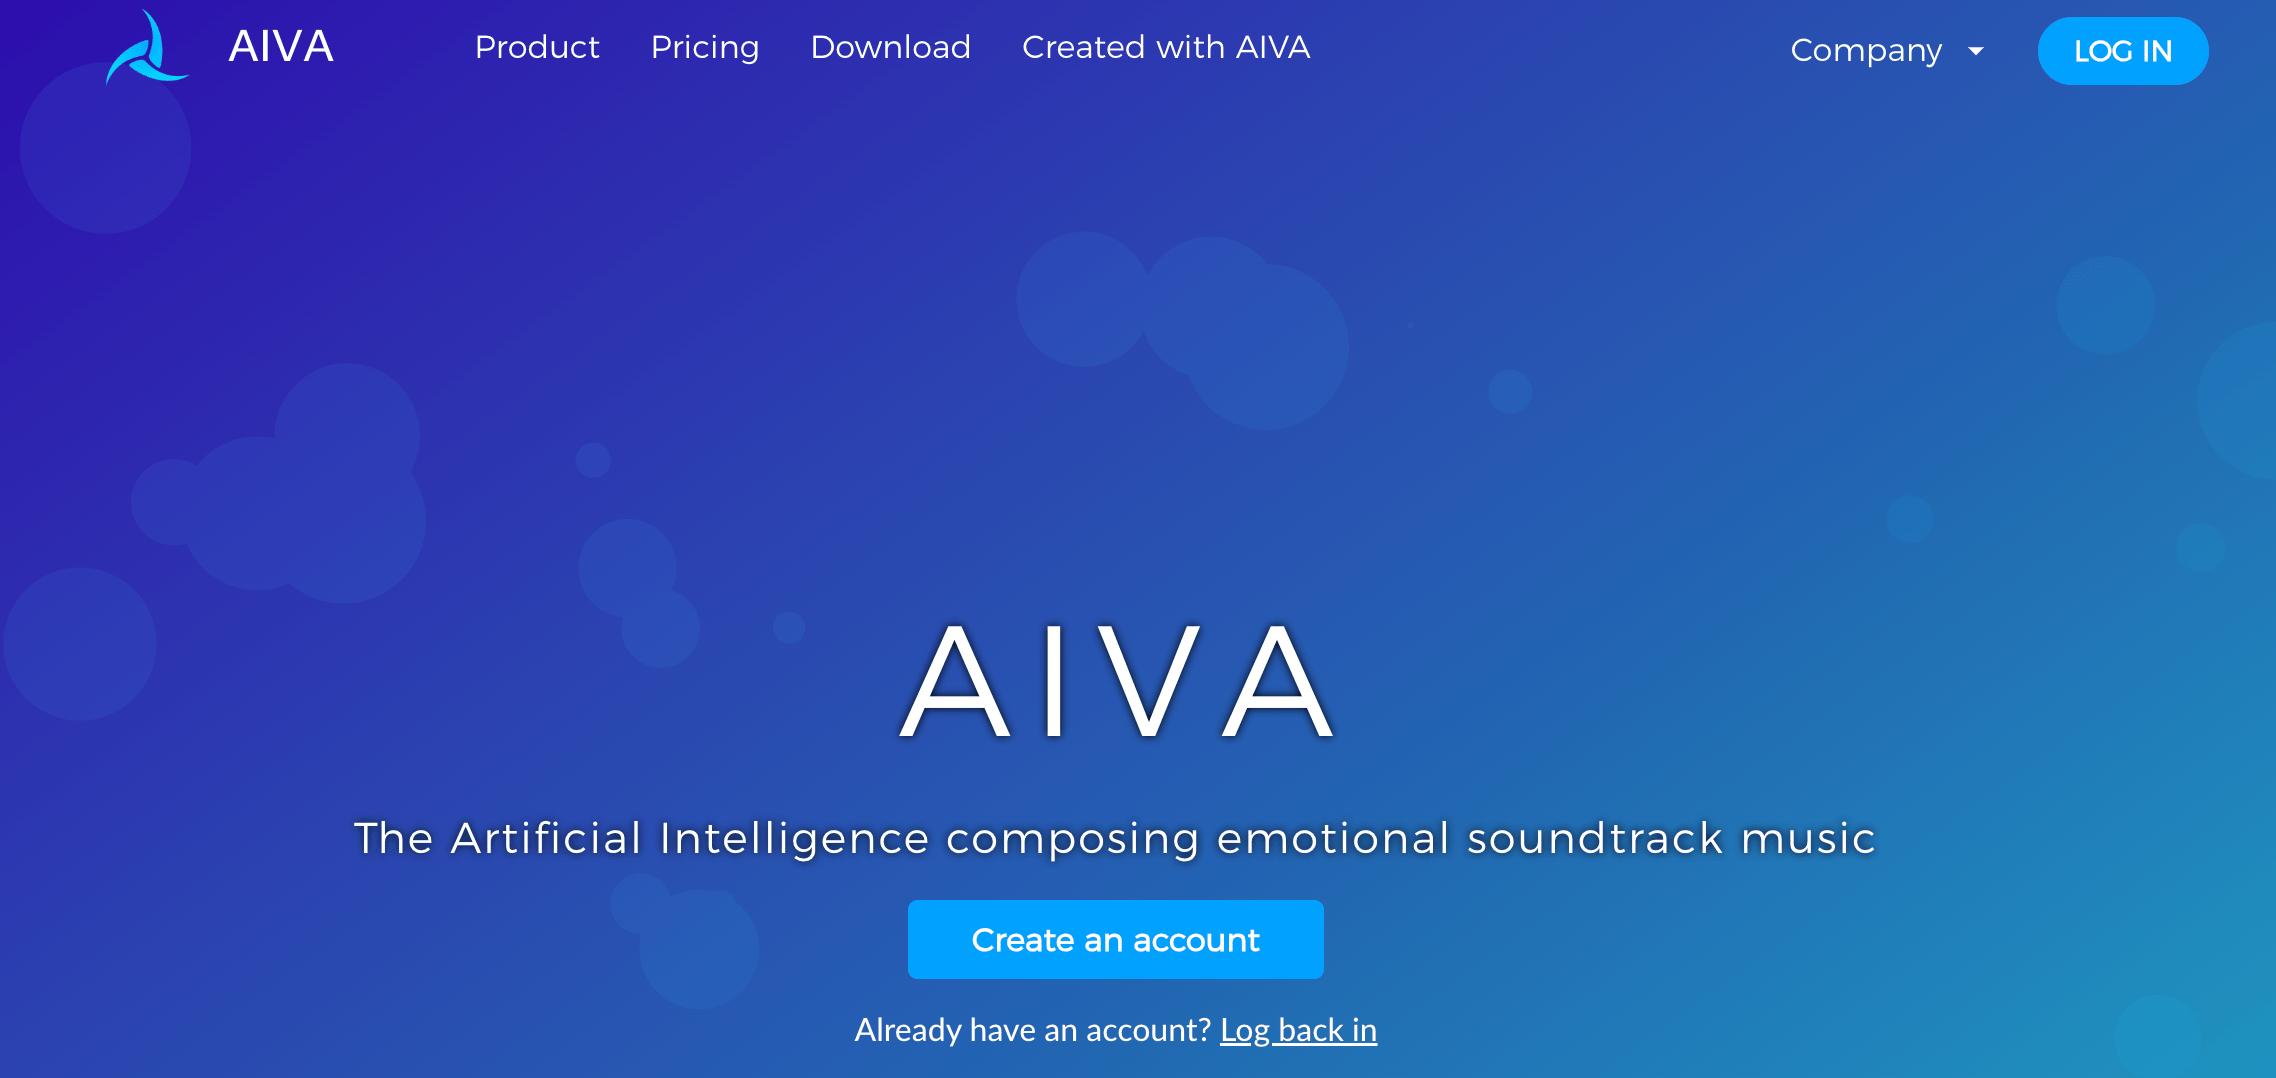 AIVA's website homepage